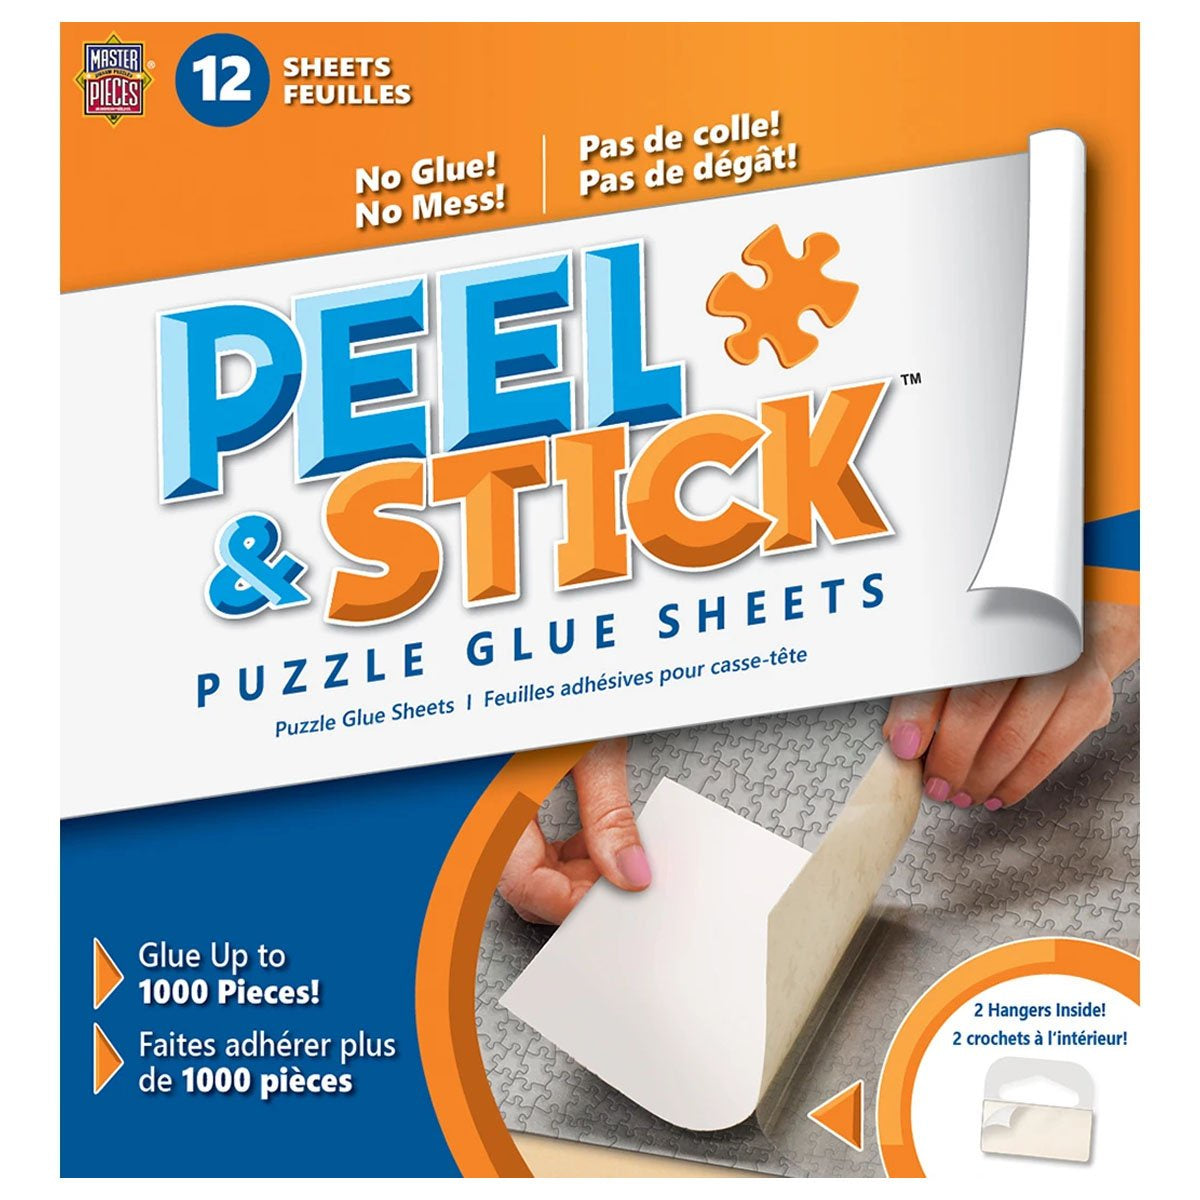 Masterpieces Puzzle Glue Sheets